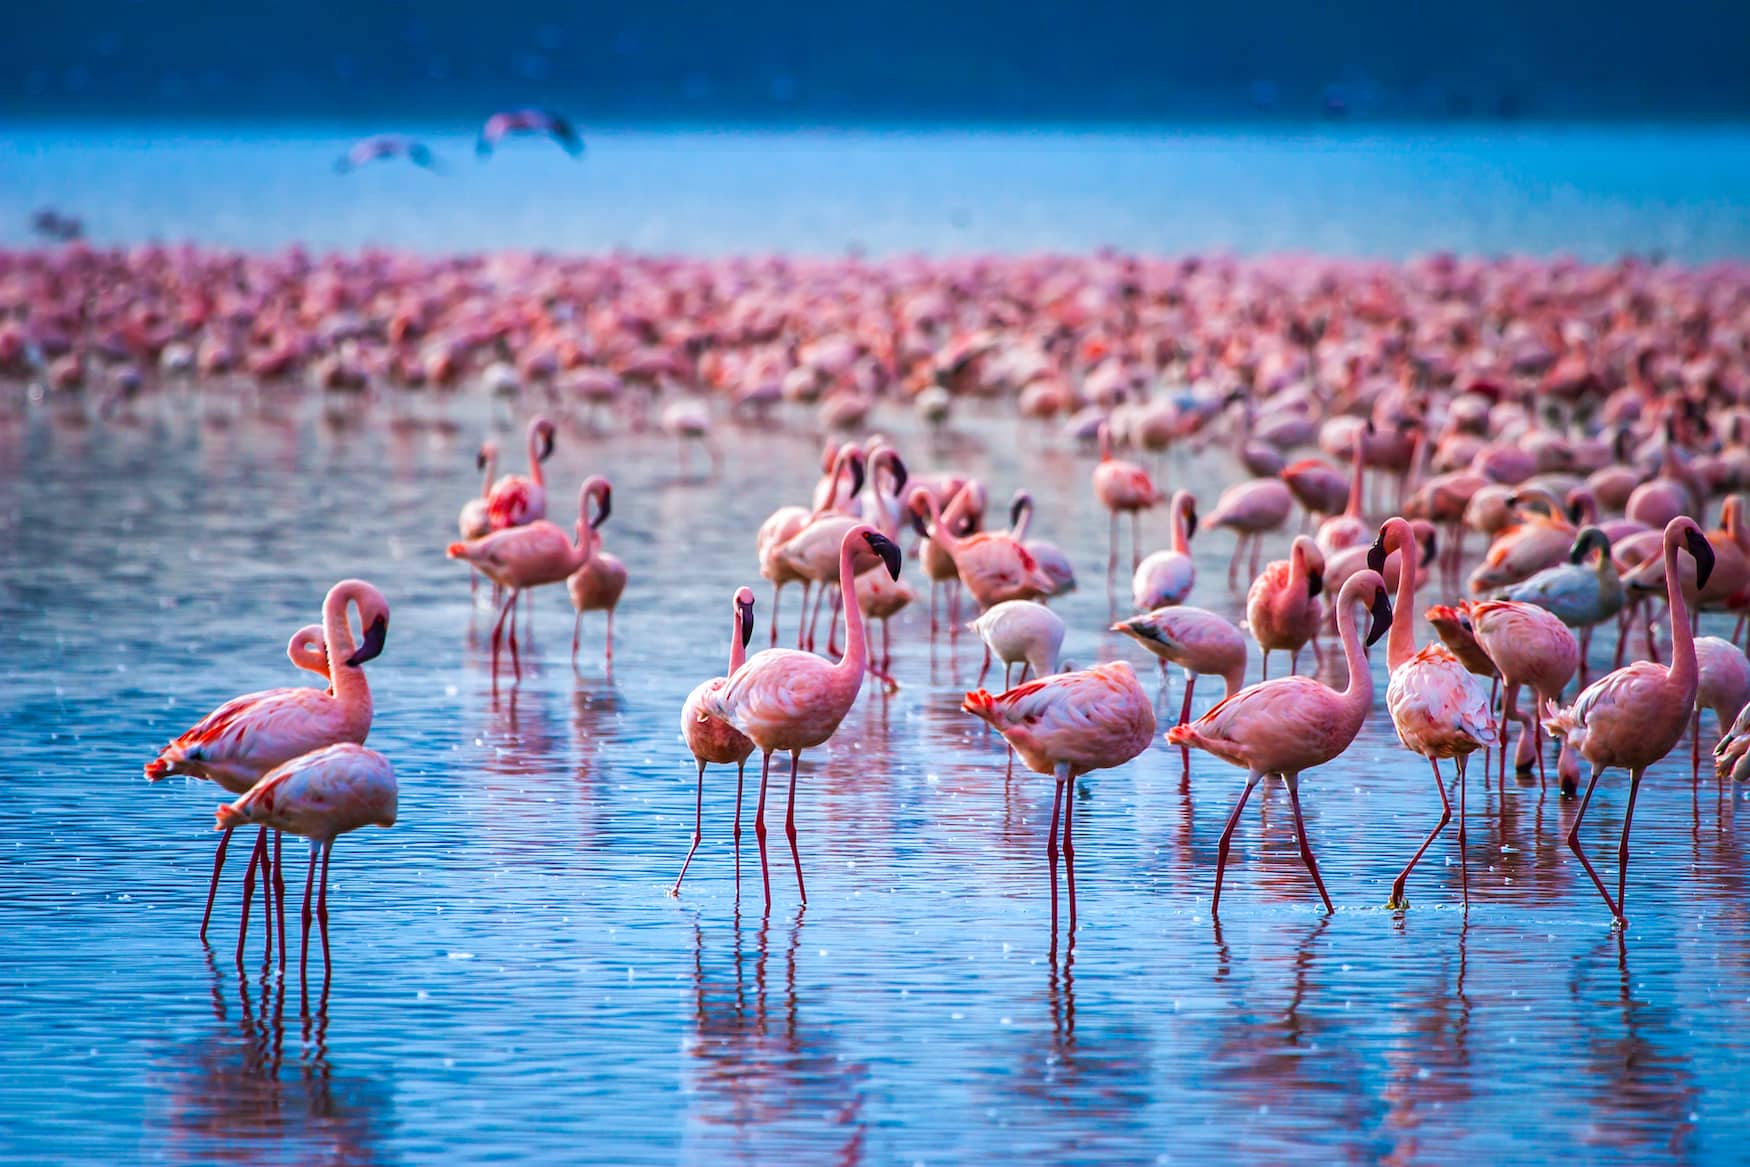 Barbie Reiseziel: der Lake Nakuru in Kenia mit seinen pinken Flamingos